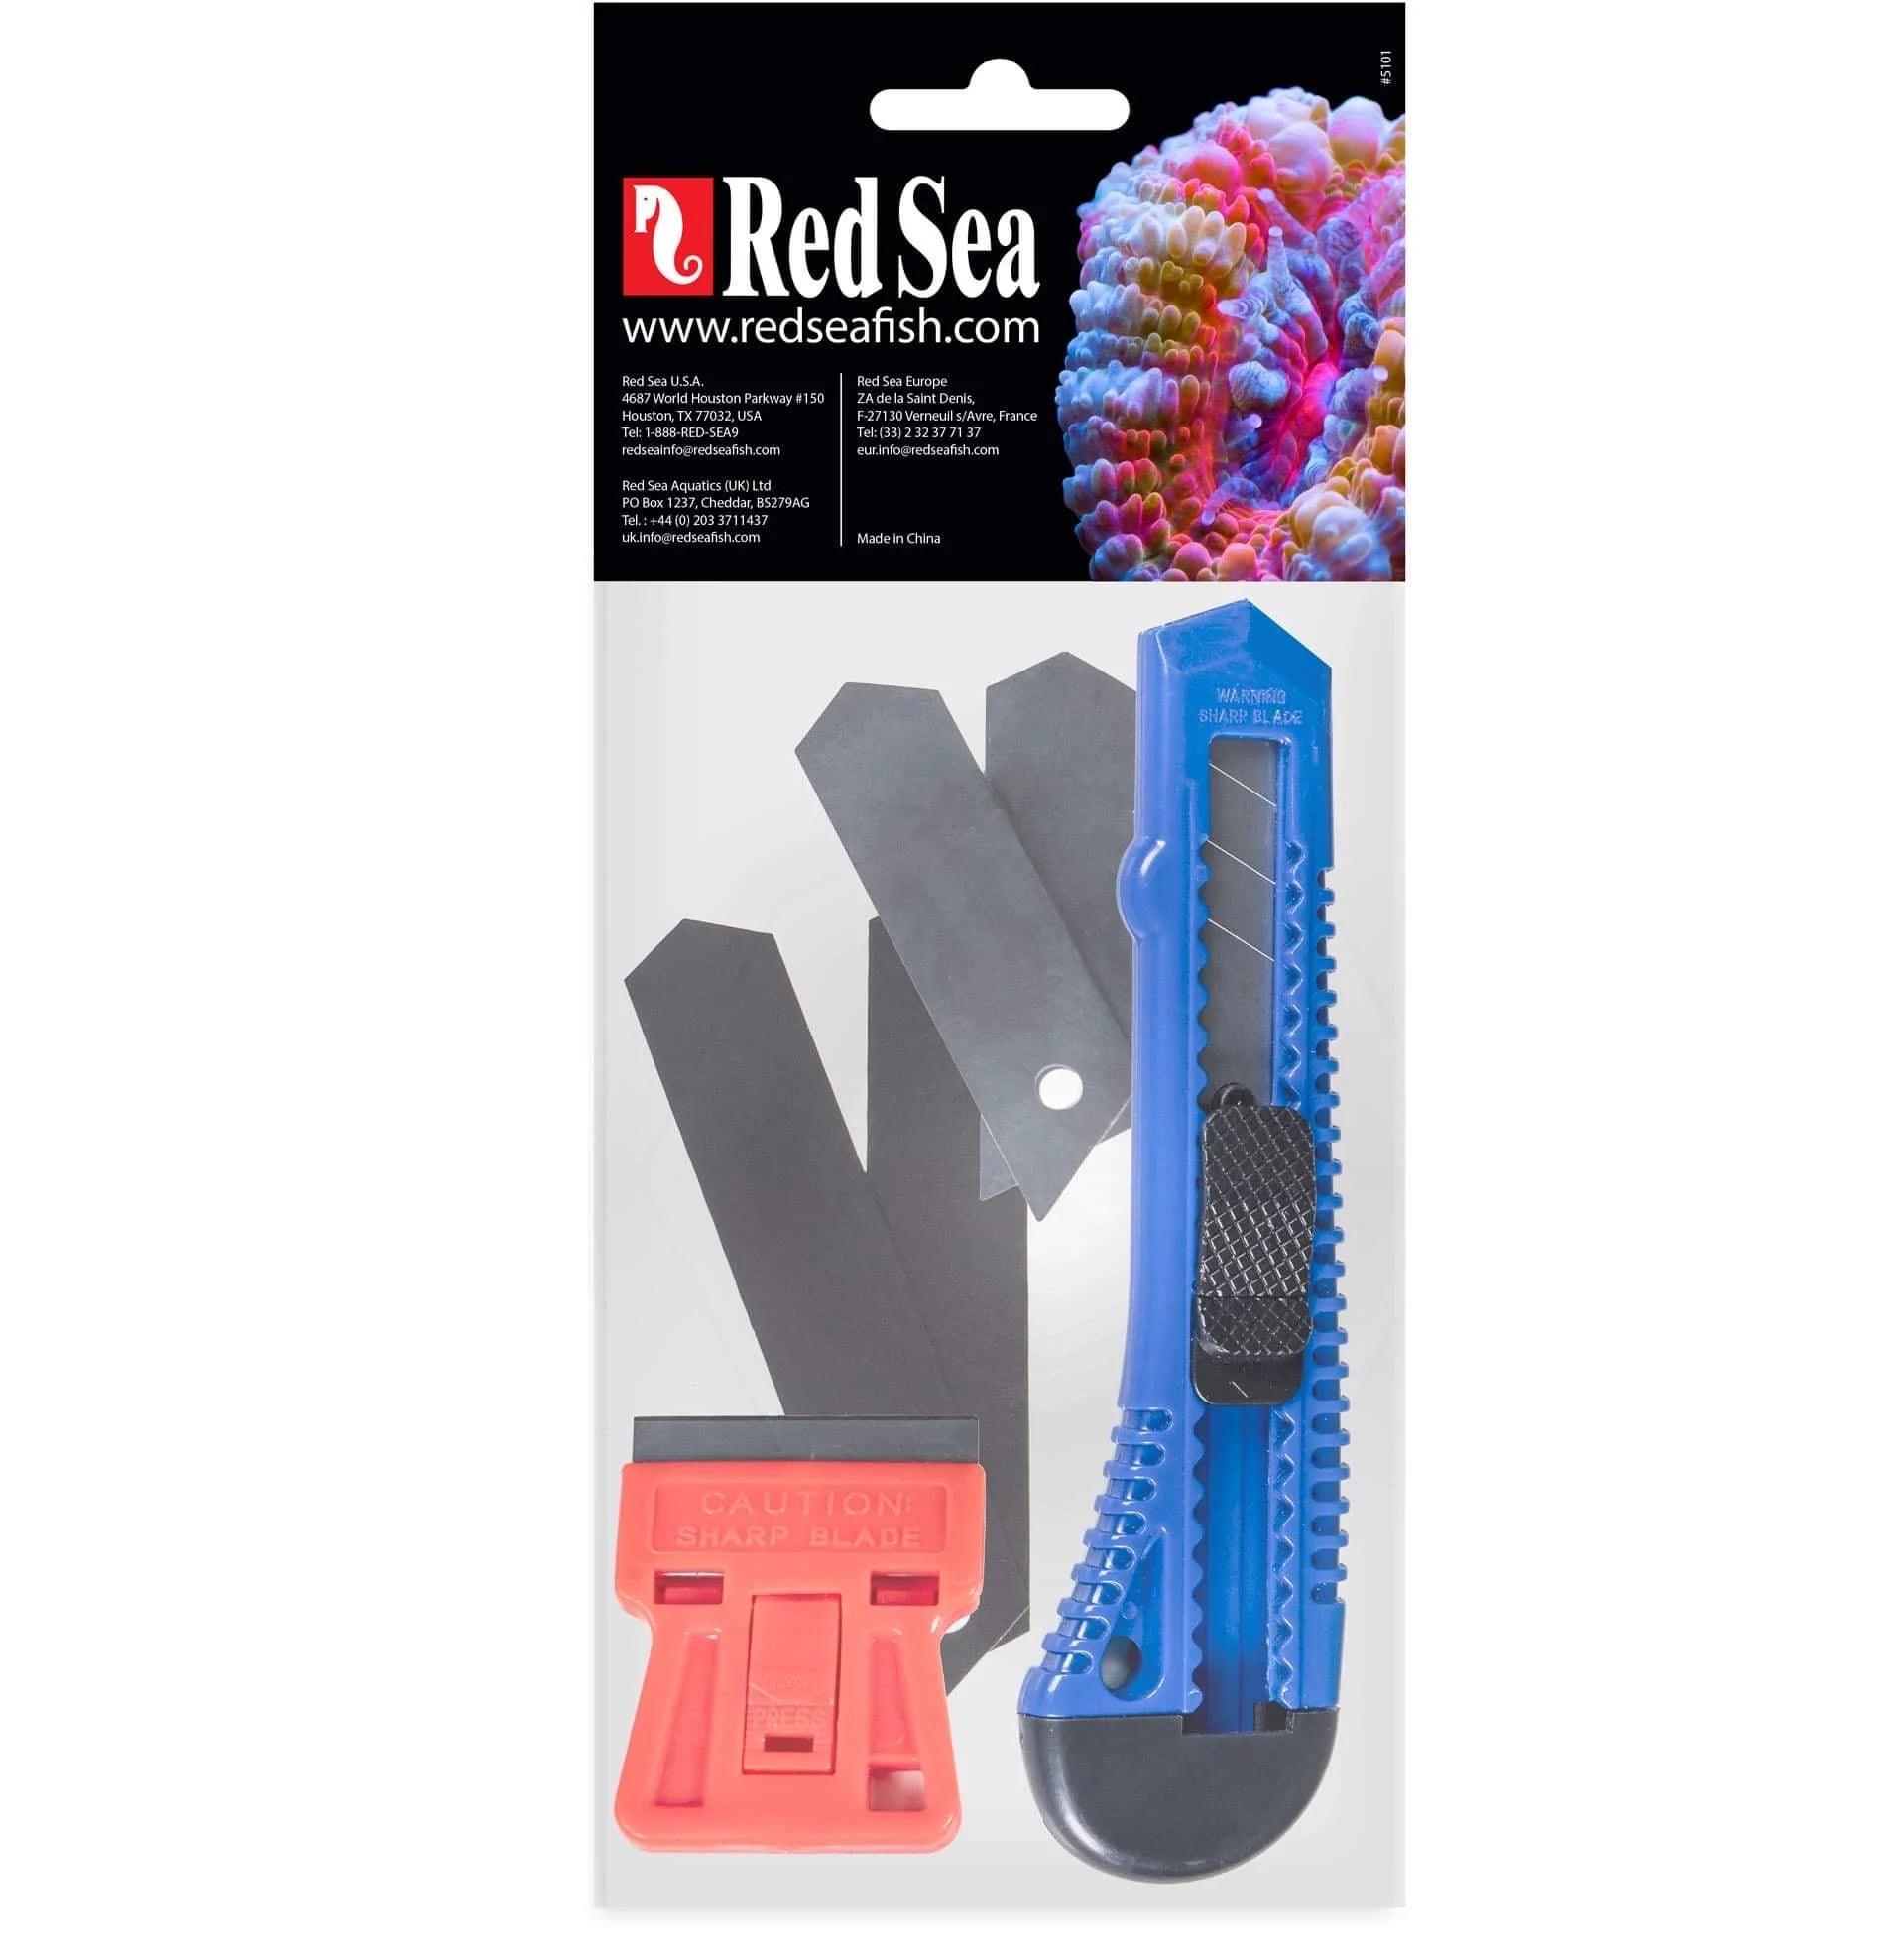 Red Sea ReefMat Modification Kit - Amazing Amazon